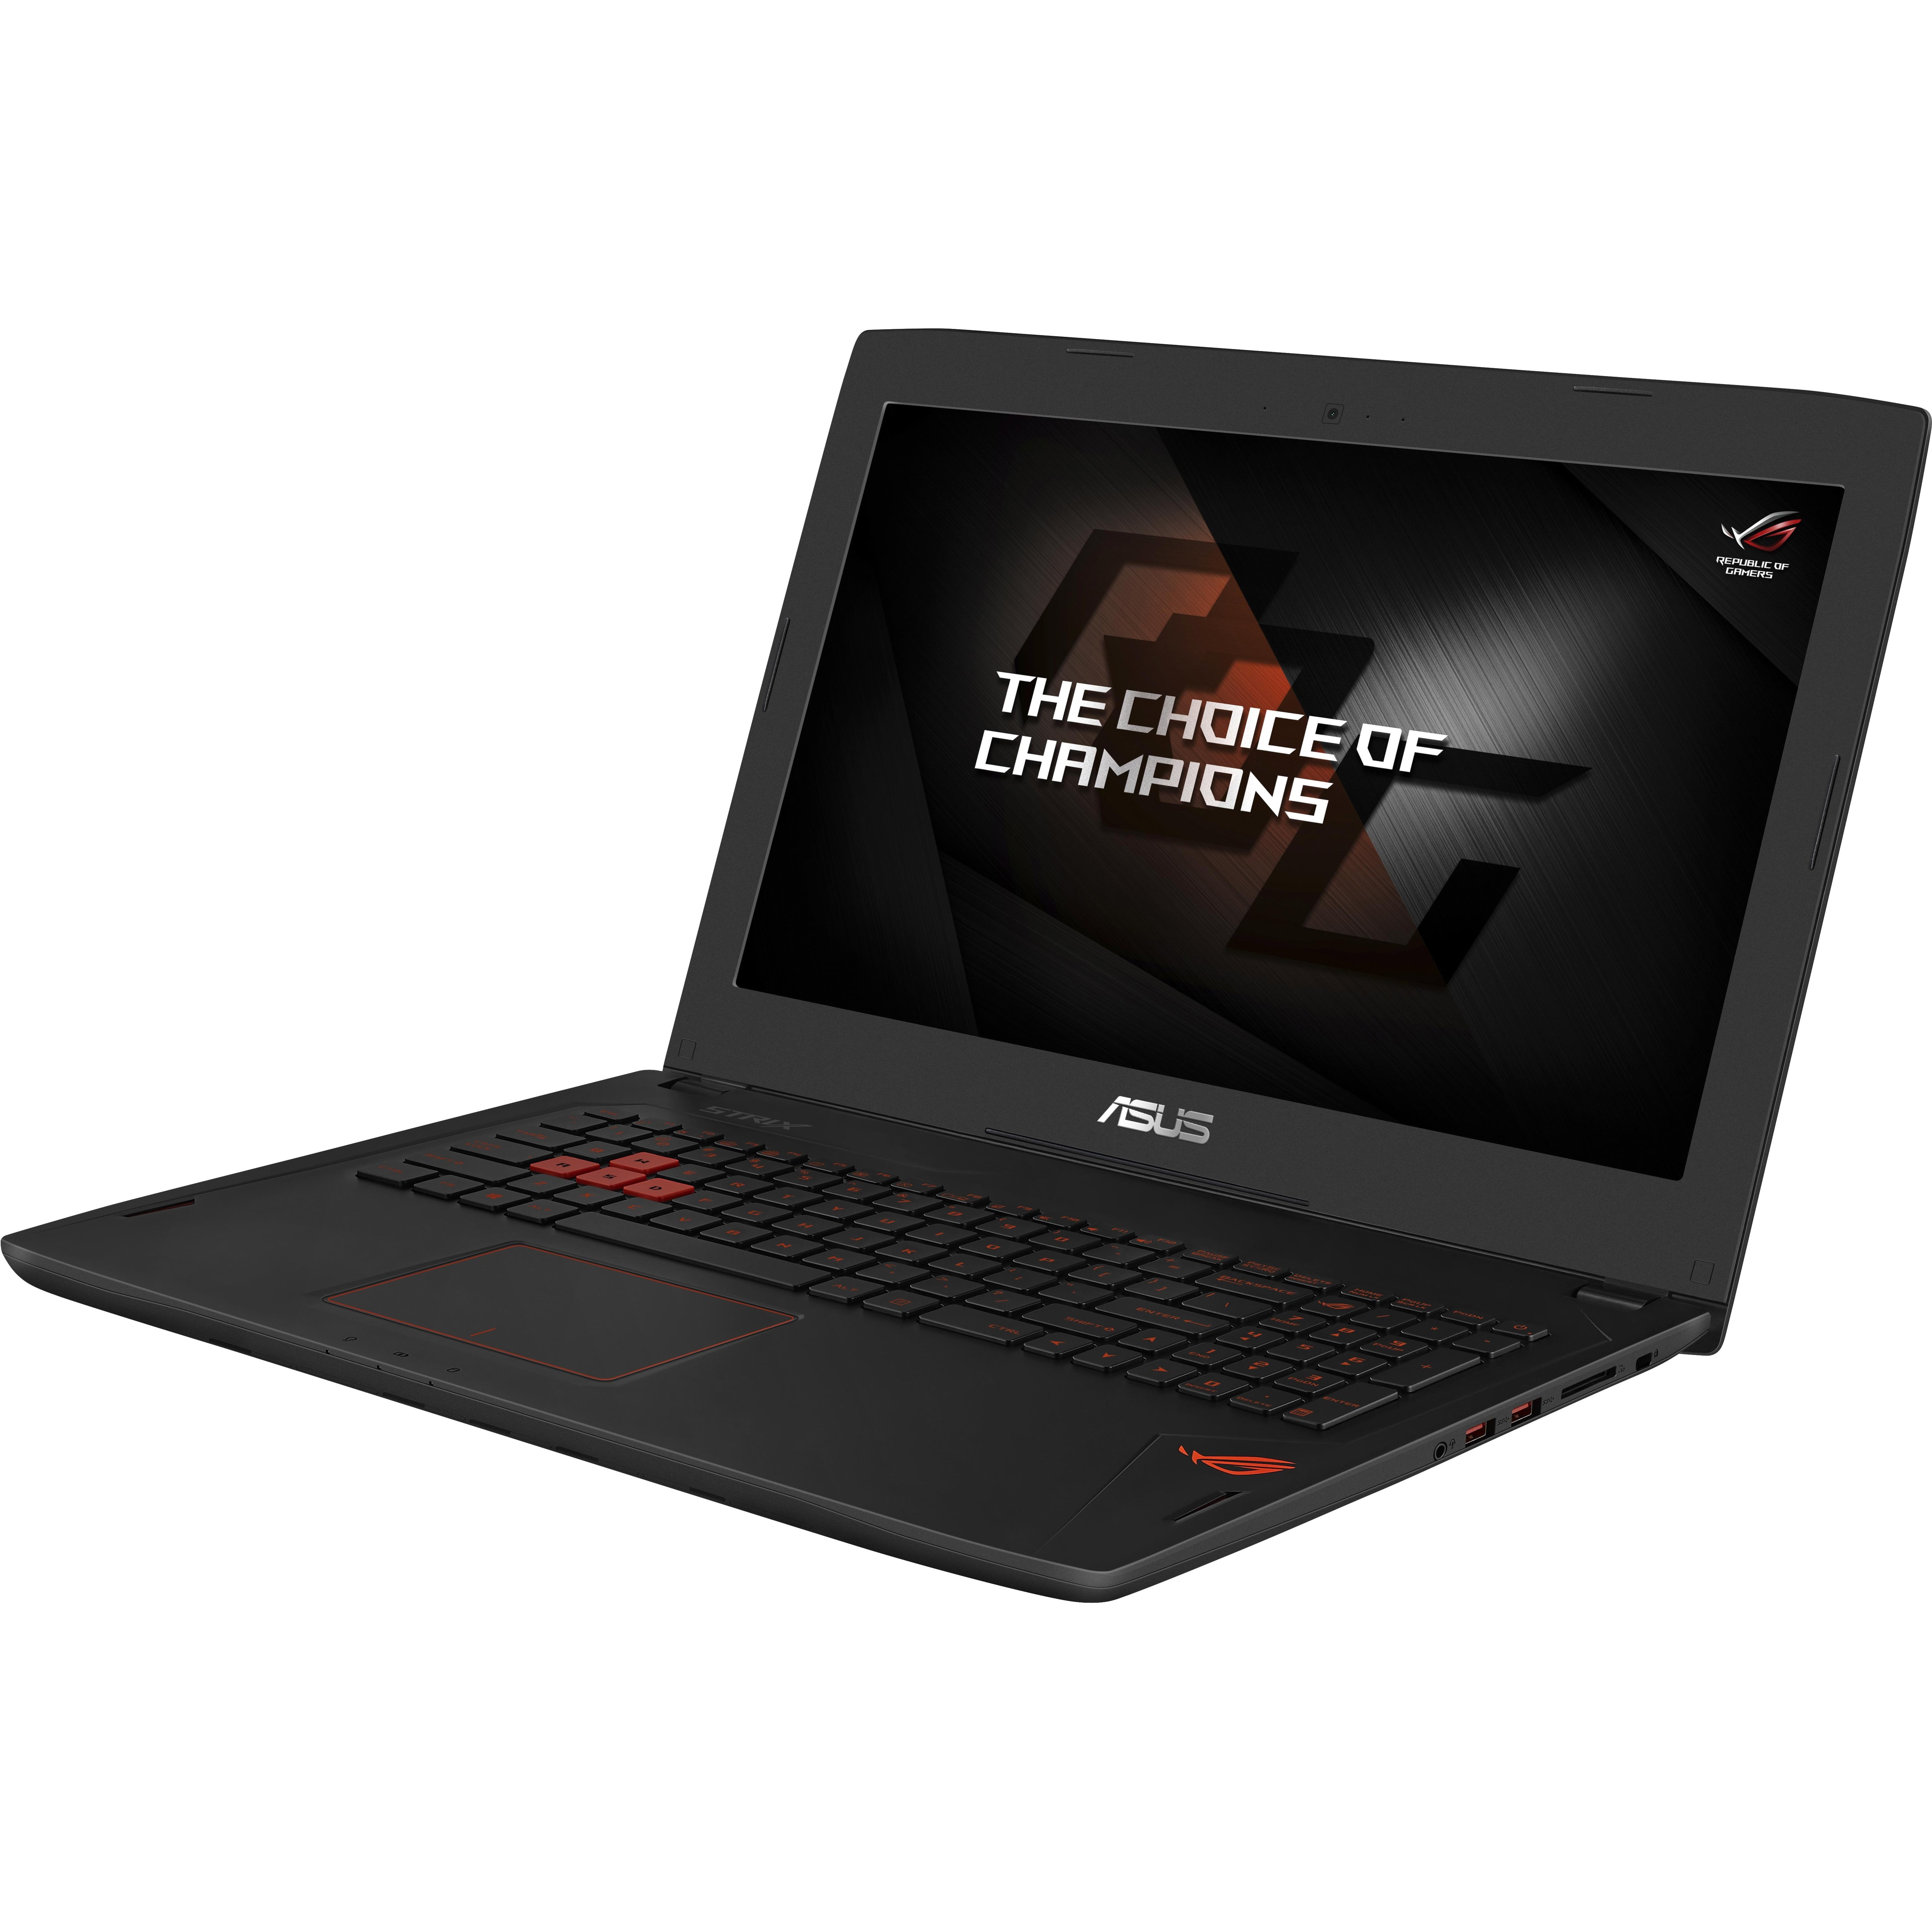 ASUS ROG Gaming Laptops 6th Generation Intel Core i7 6700HQ (2.60 GHz) 16 GB Memory 1 TB 128 SSD - Walmart.com